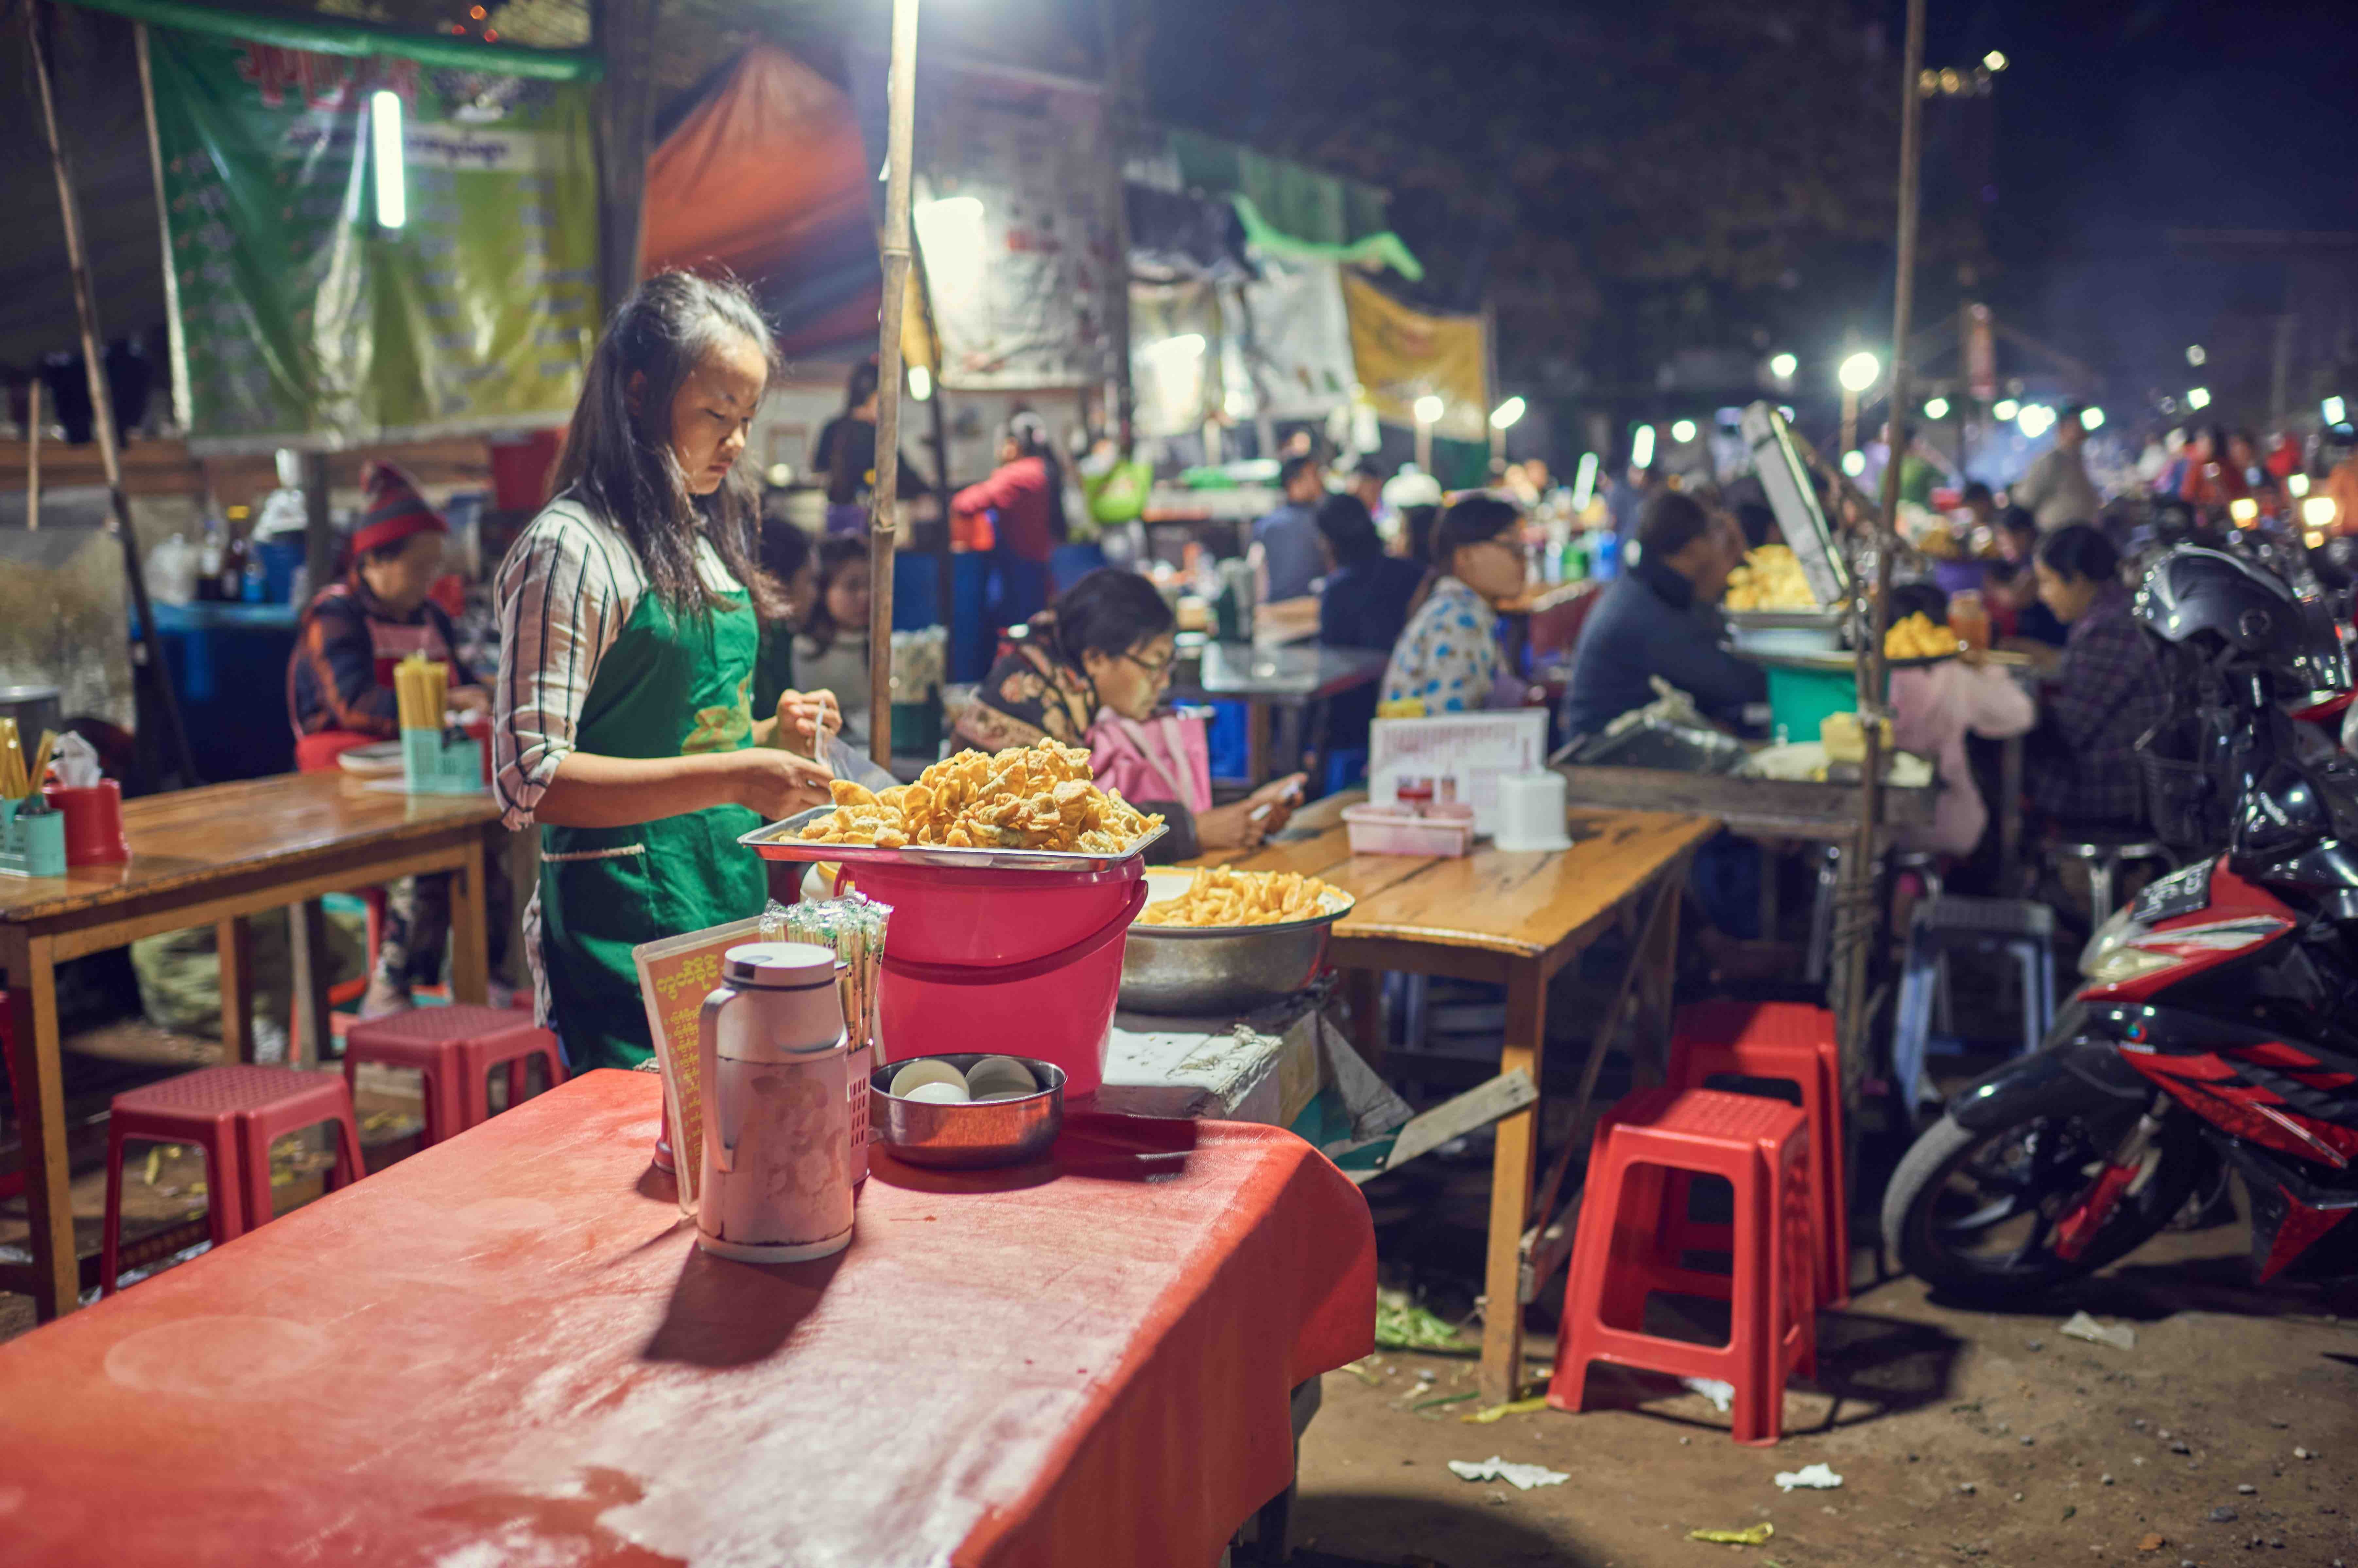 CAPITAL MALL MANDALAY超市举办缅甸特色食品展_胞波网